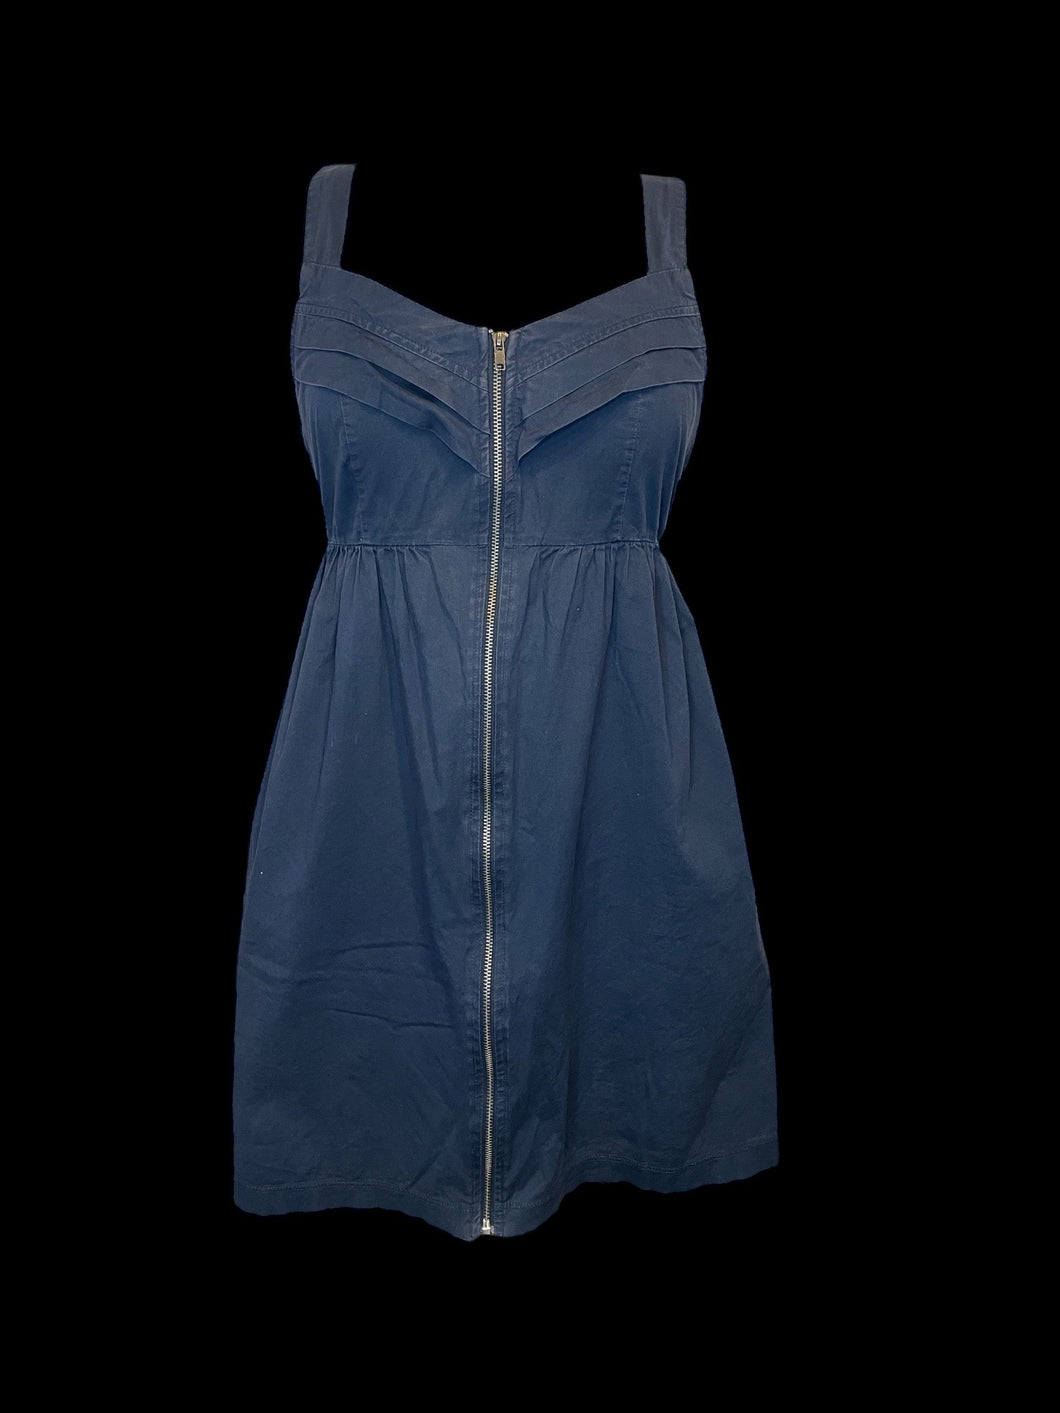 S Dark blue sleeveless zip-up cotton dress w/ pleating details, pockets, & elastic waist